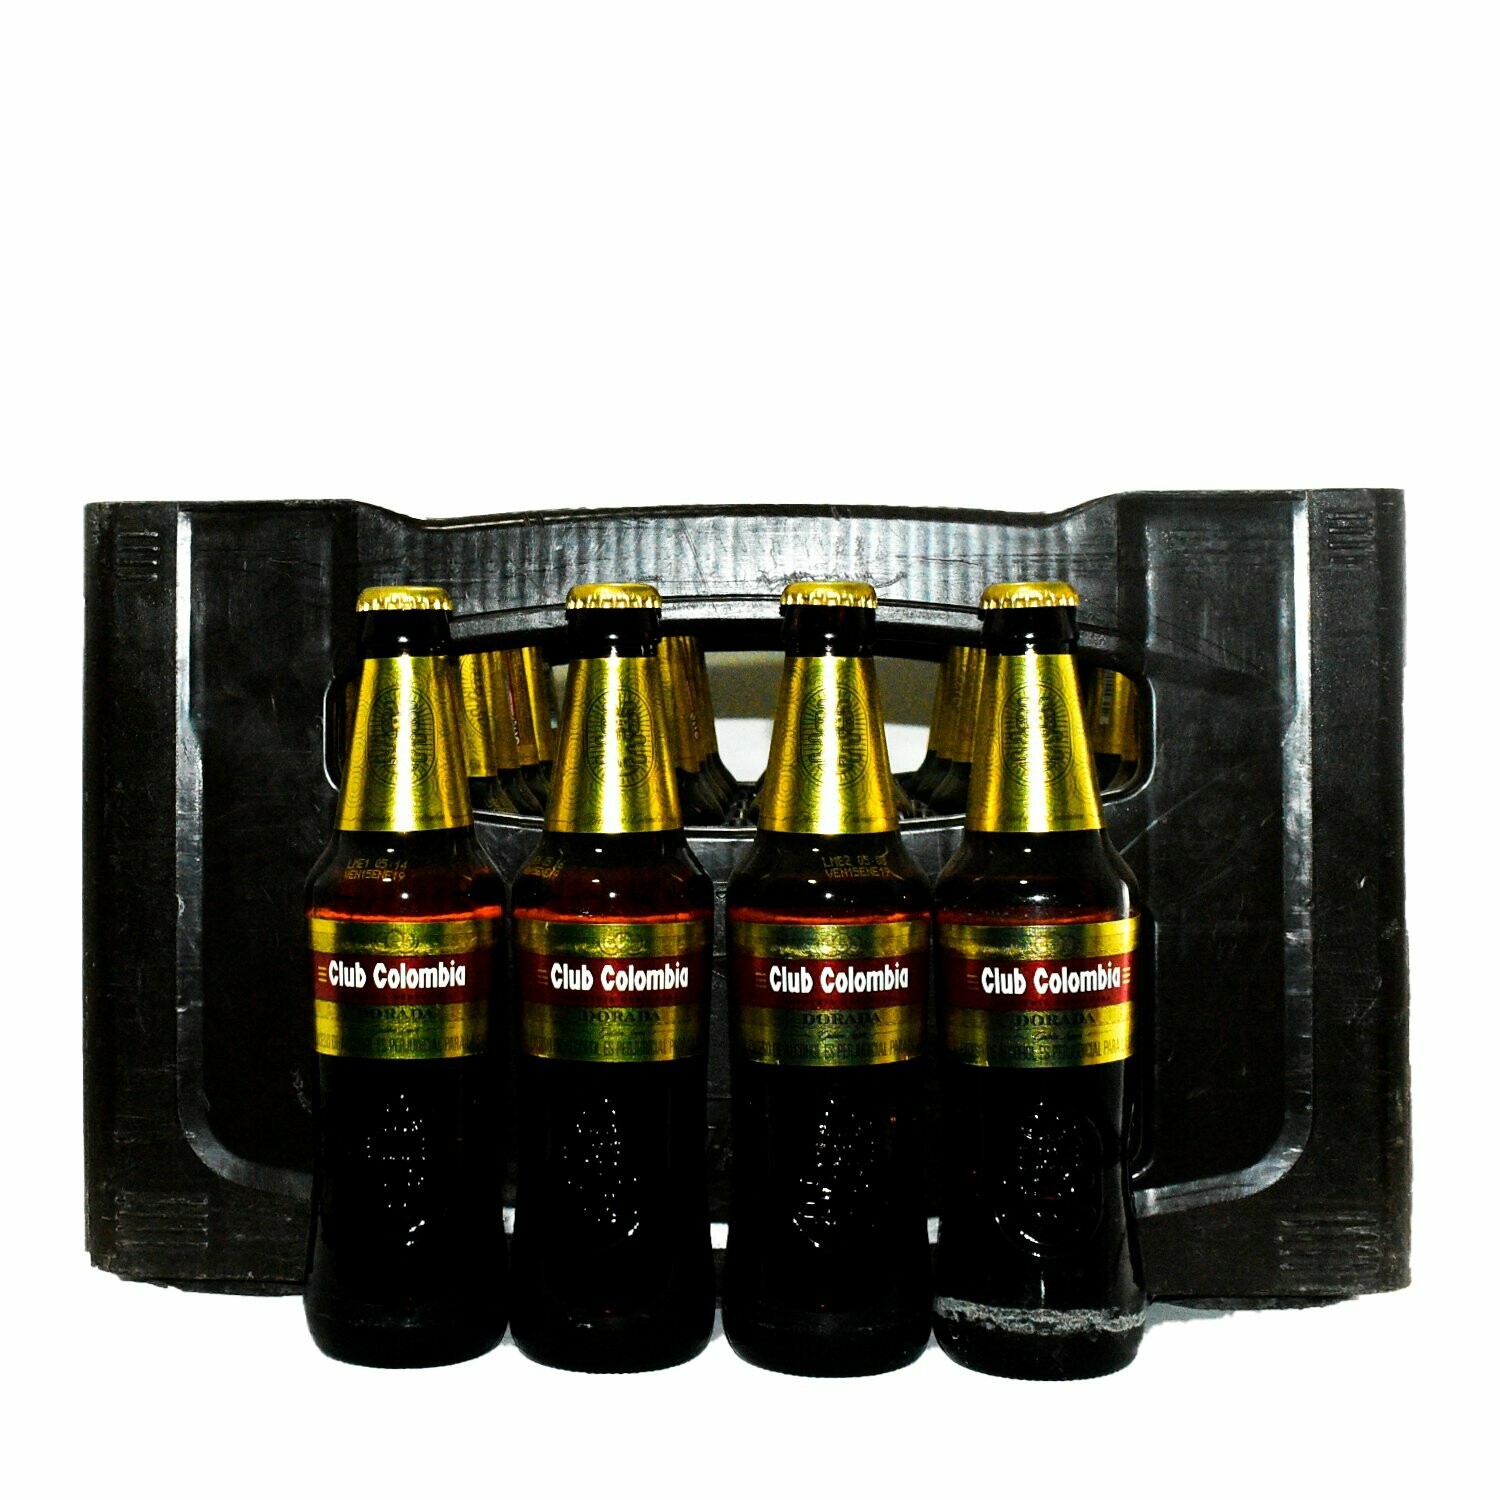 Cerveza Club Colombia dorada Botella Retornable cajonx30